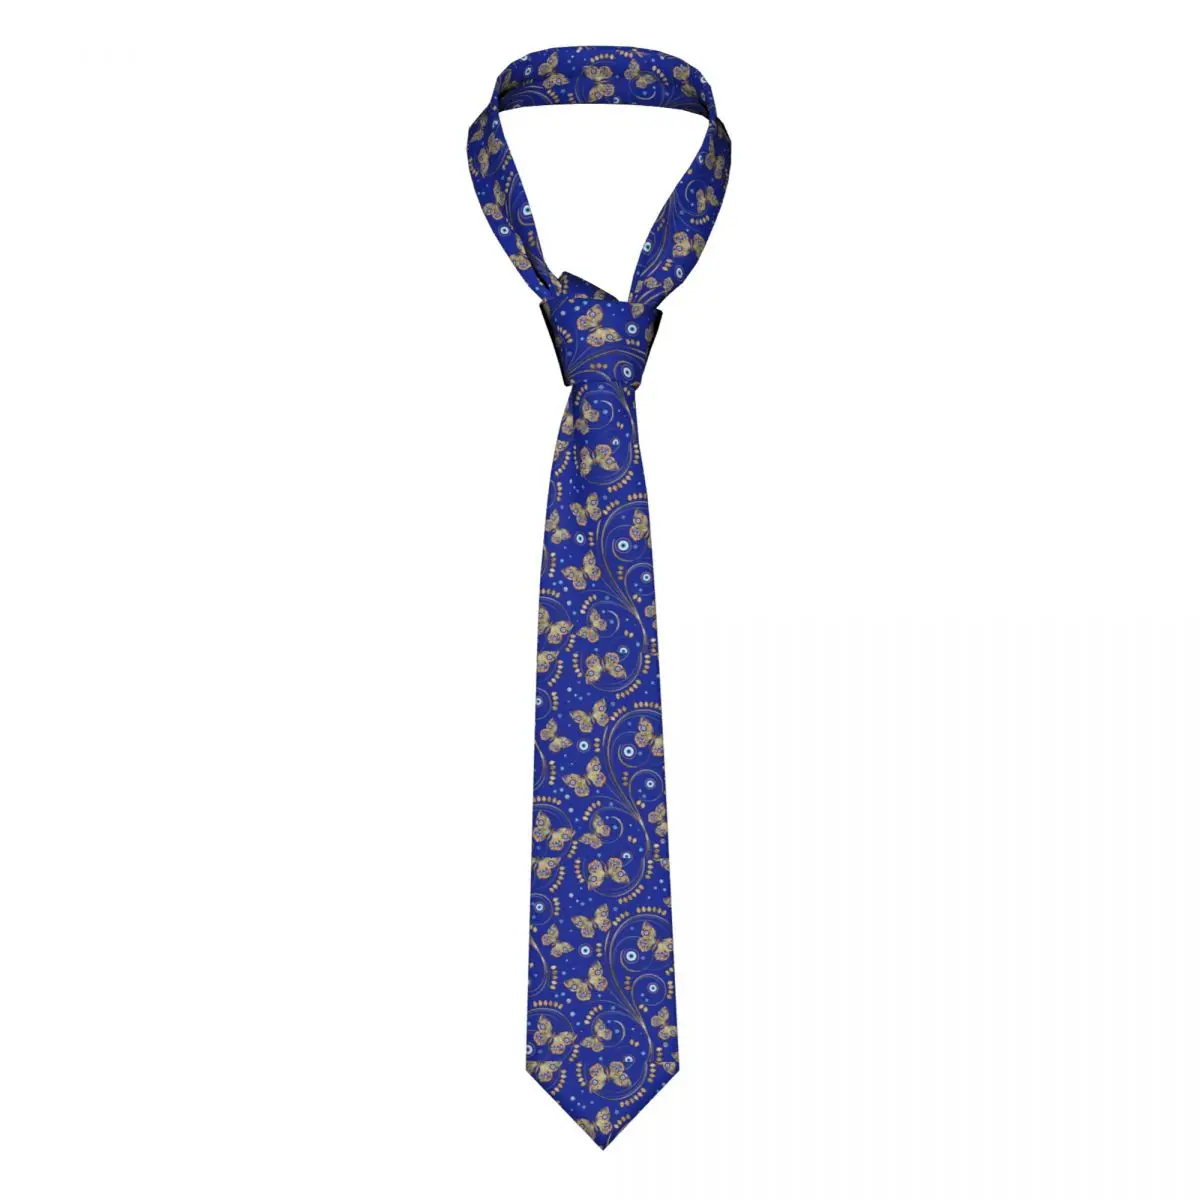 

Golden Butterfly Tie Evil Eye Print Accessories For Man Neck Ties Fashion Blouse 8CM Party Cravat